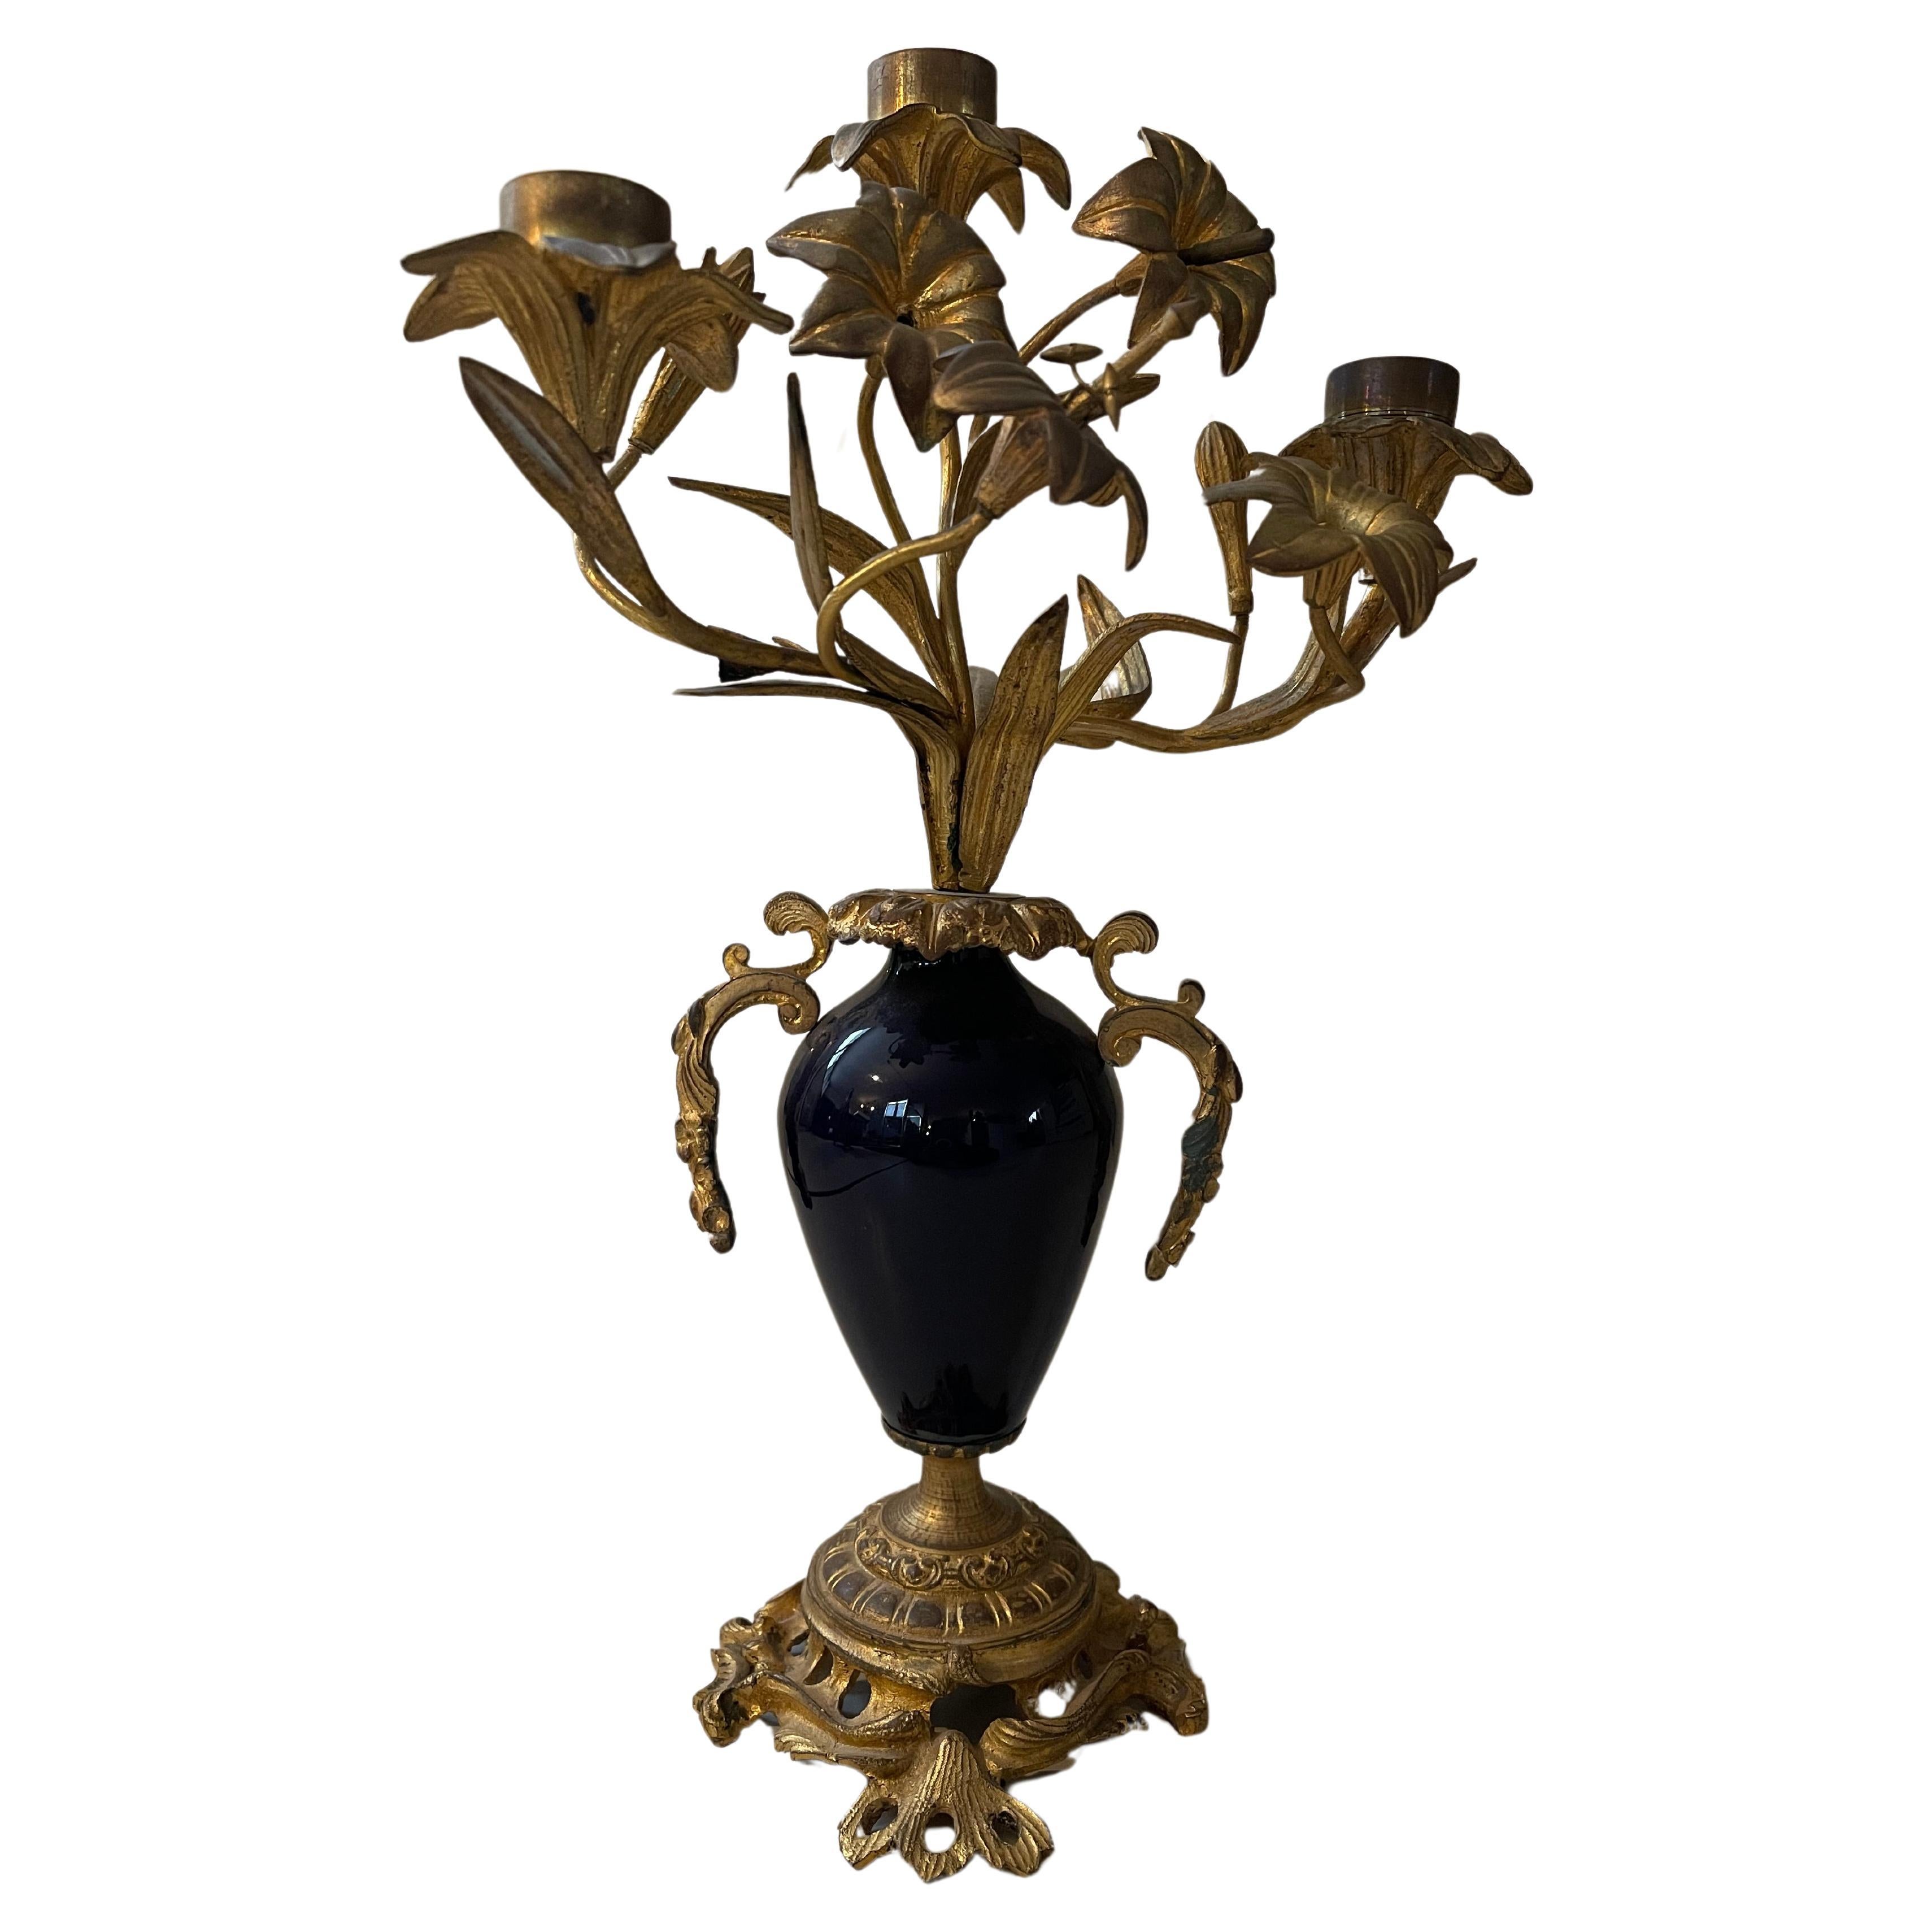 Antique bronze and porcelain paris style candelabra For Sale